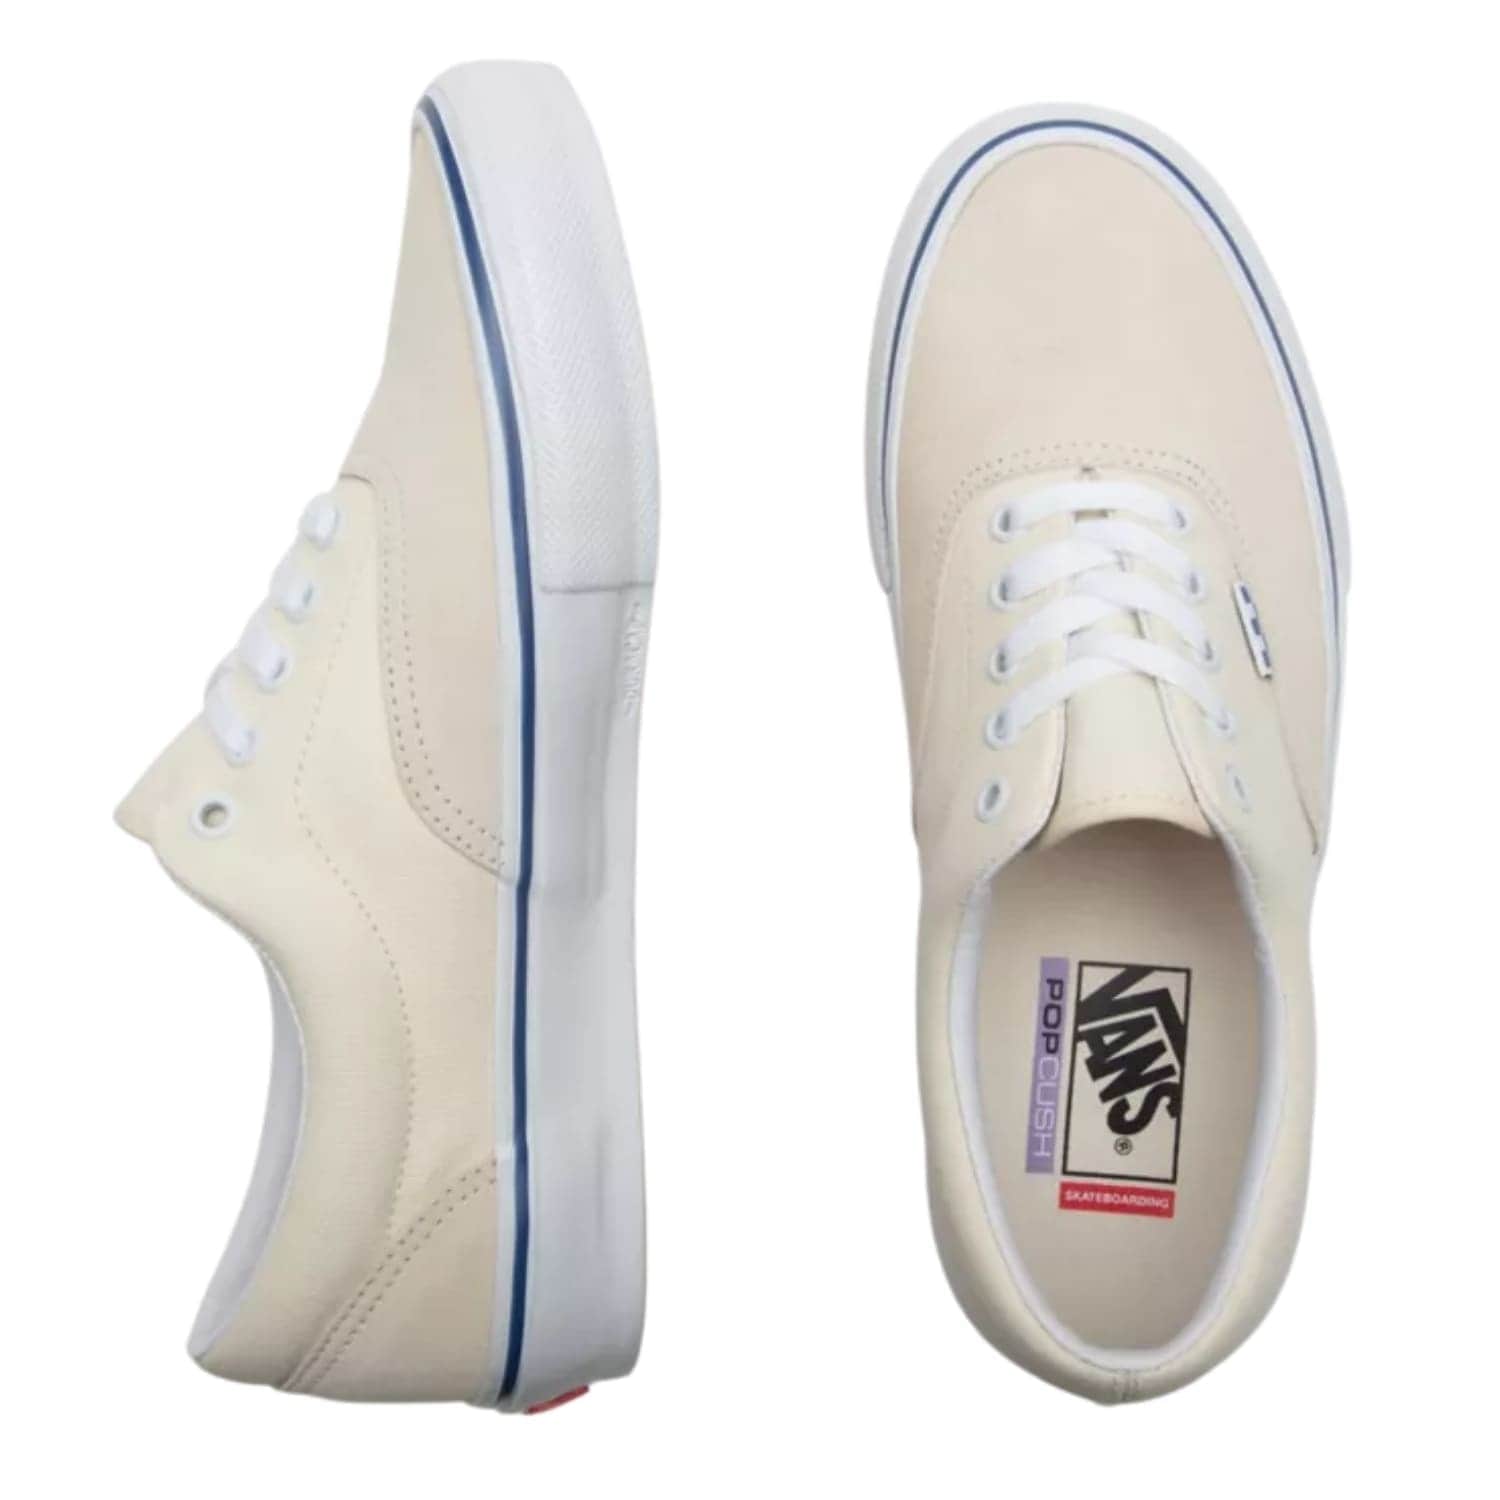 Boren Schaar ze Vans Era Pro Skate Shoes - Off White | Free UK Delivery Available - Yakwax